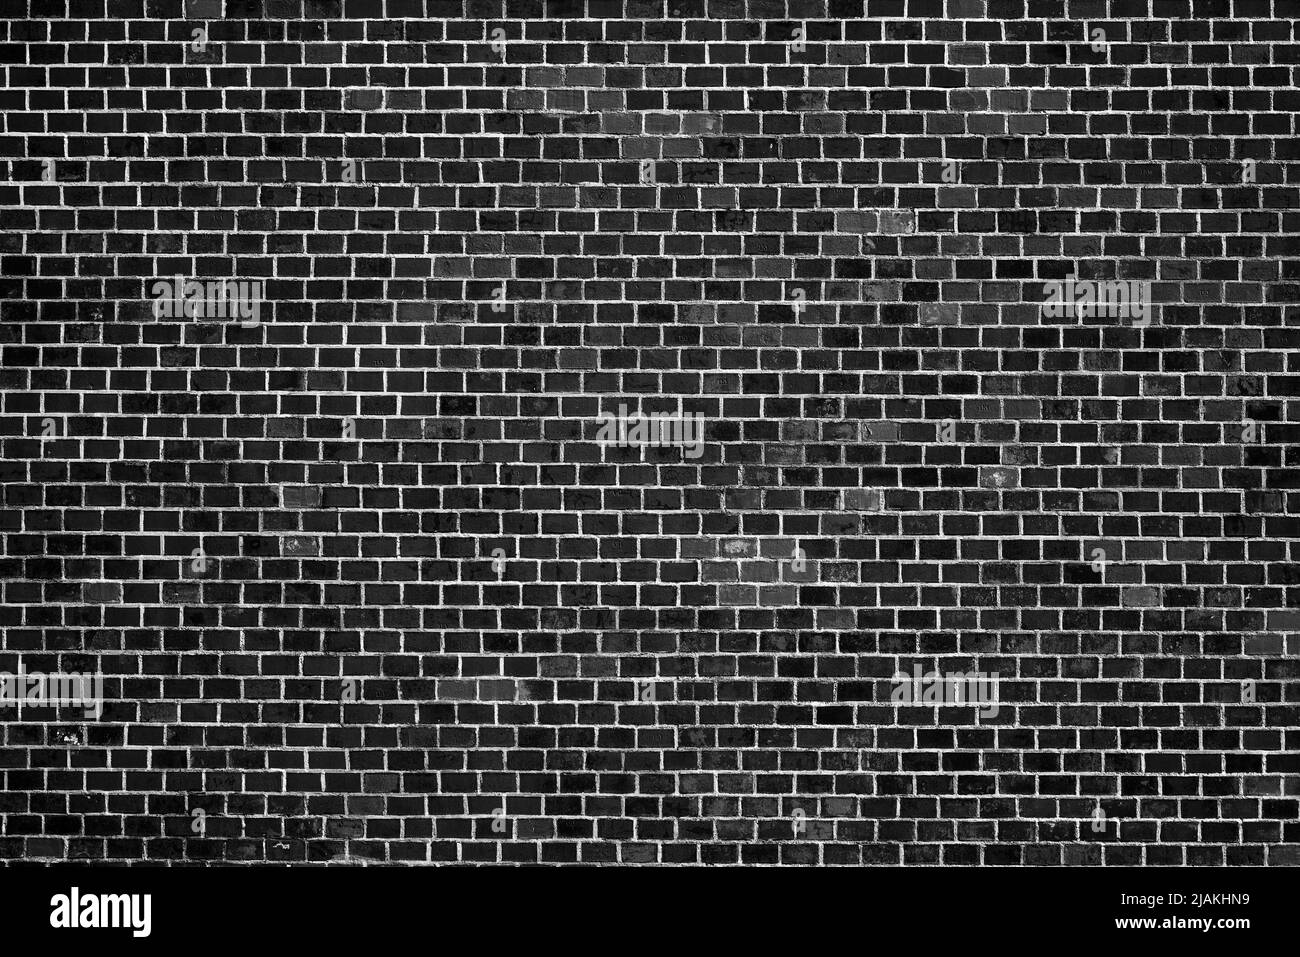 Old Black Brick Wall. An ancient fortress. Medieval brick building. Big Brick wall background texture. Stock Photo